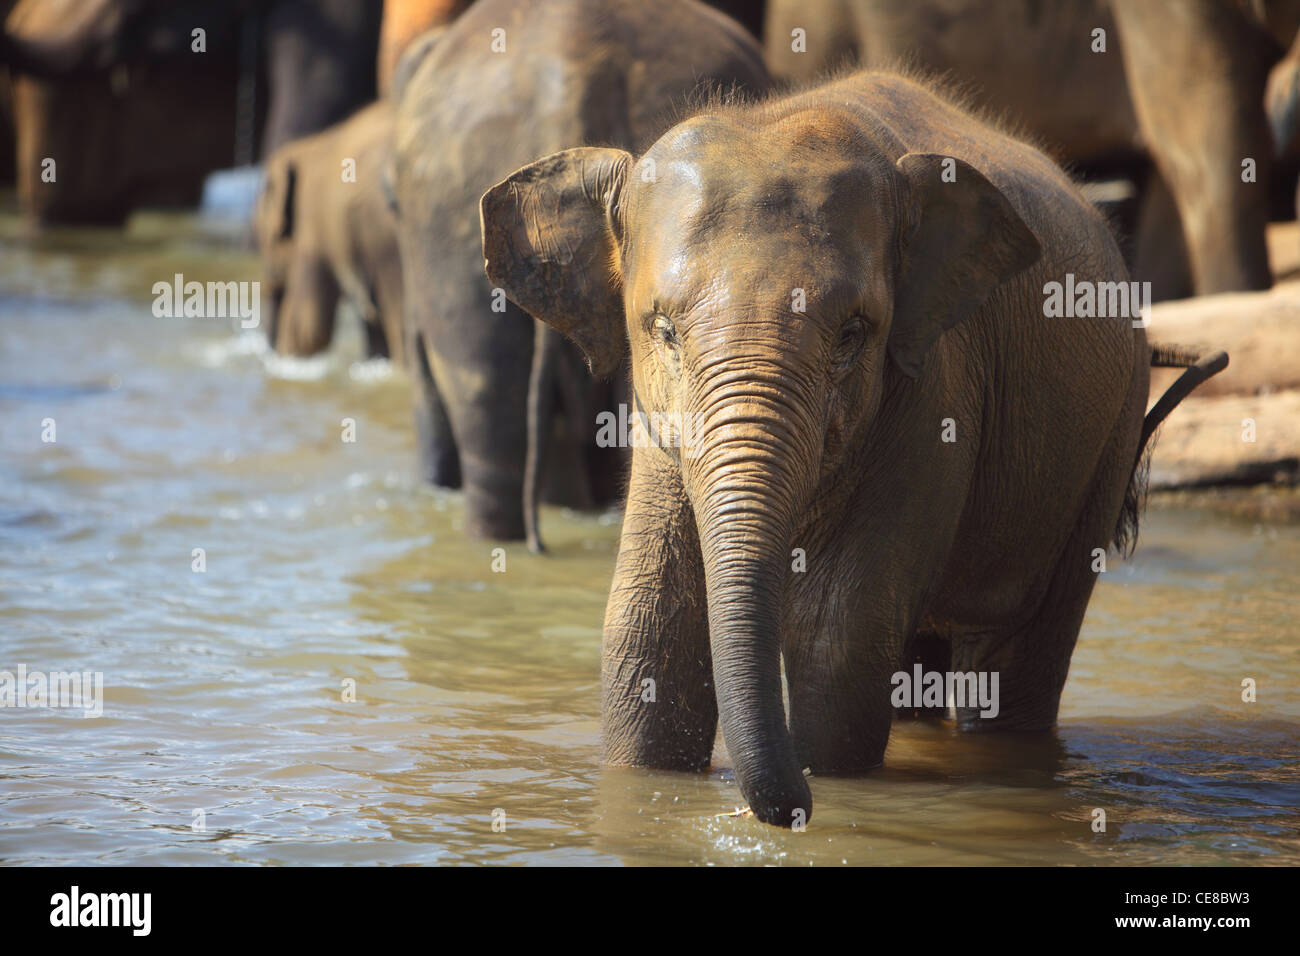 Les éléphants au Sri Lanka, l'orphelinat des éléphants, Pinnewela Pinnewala Elephant Sanctuary Banque D'Images